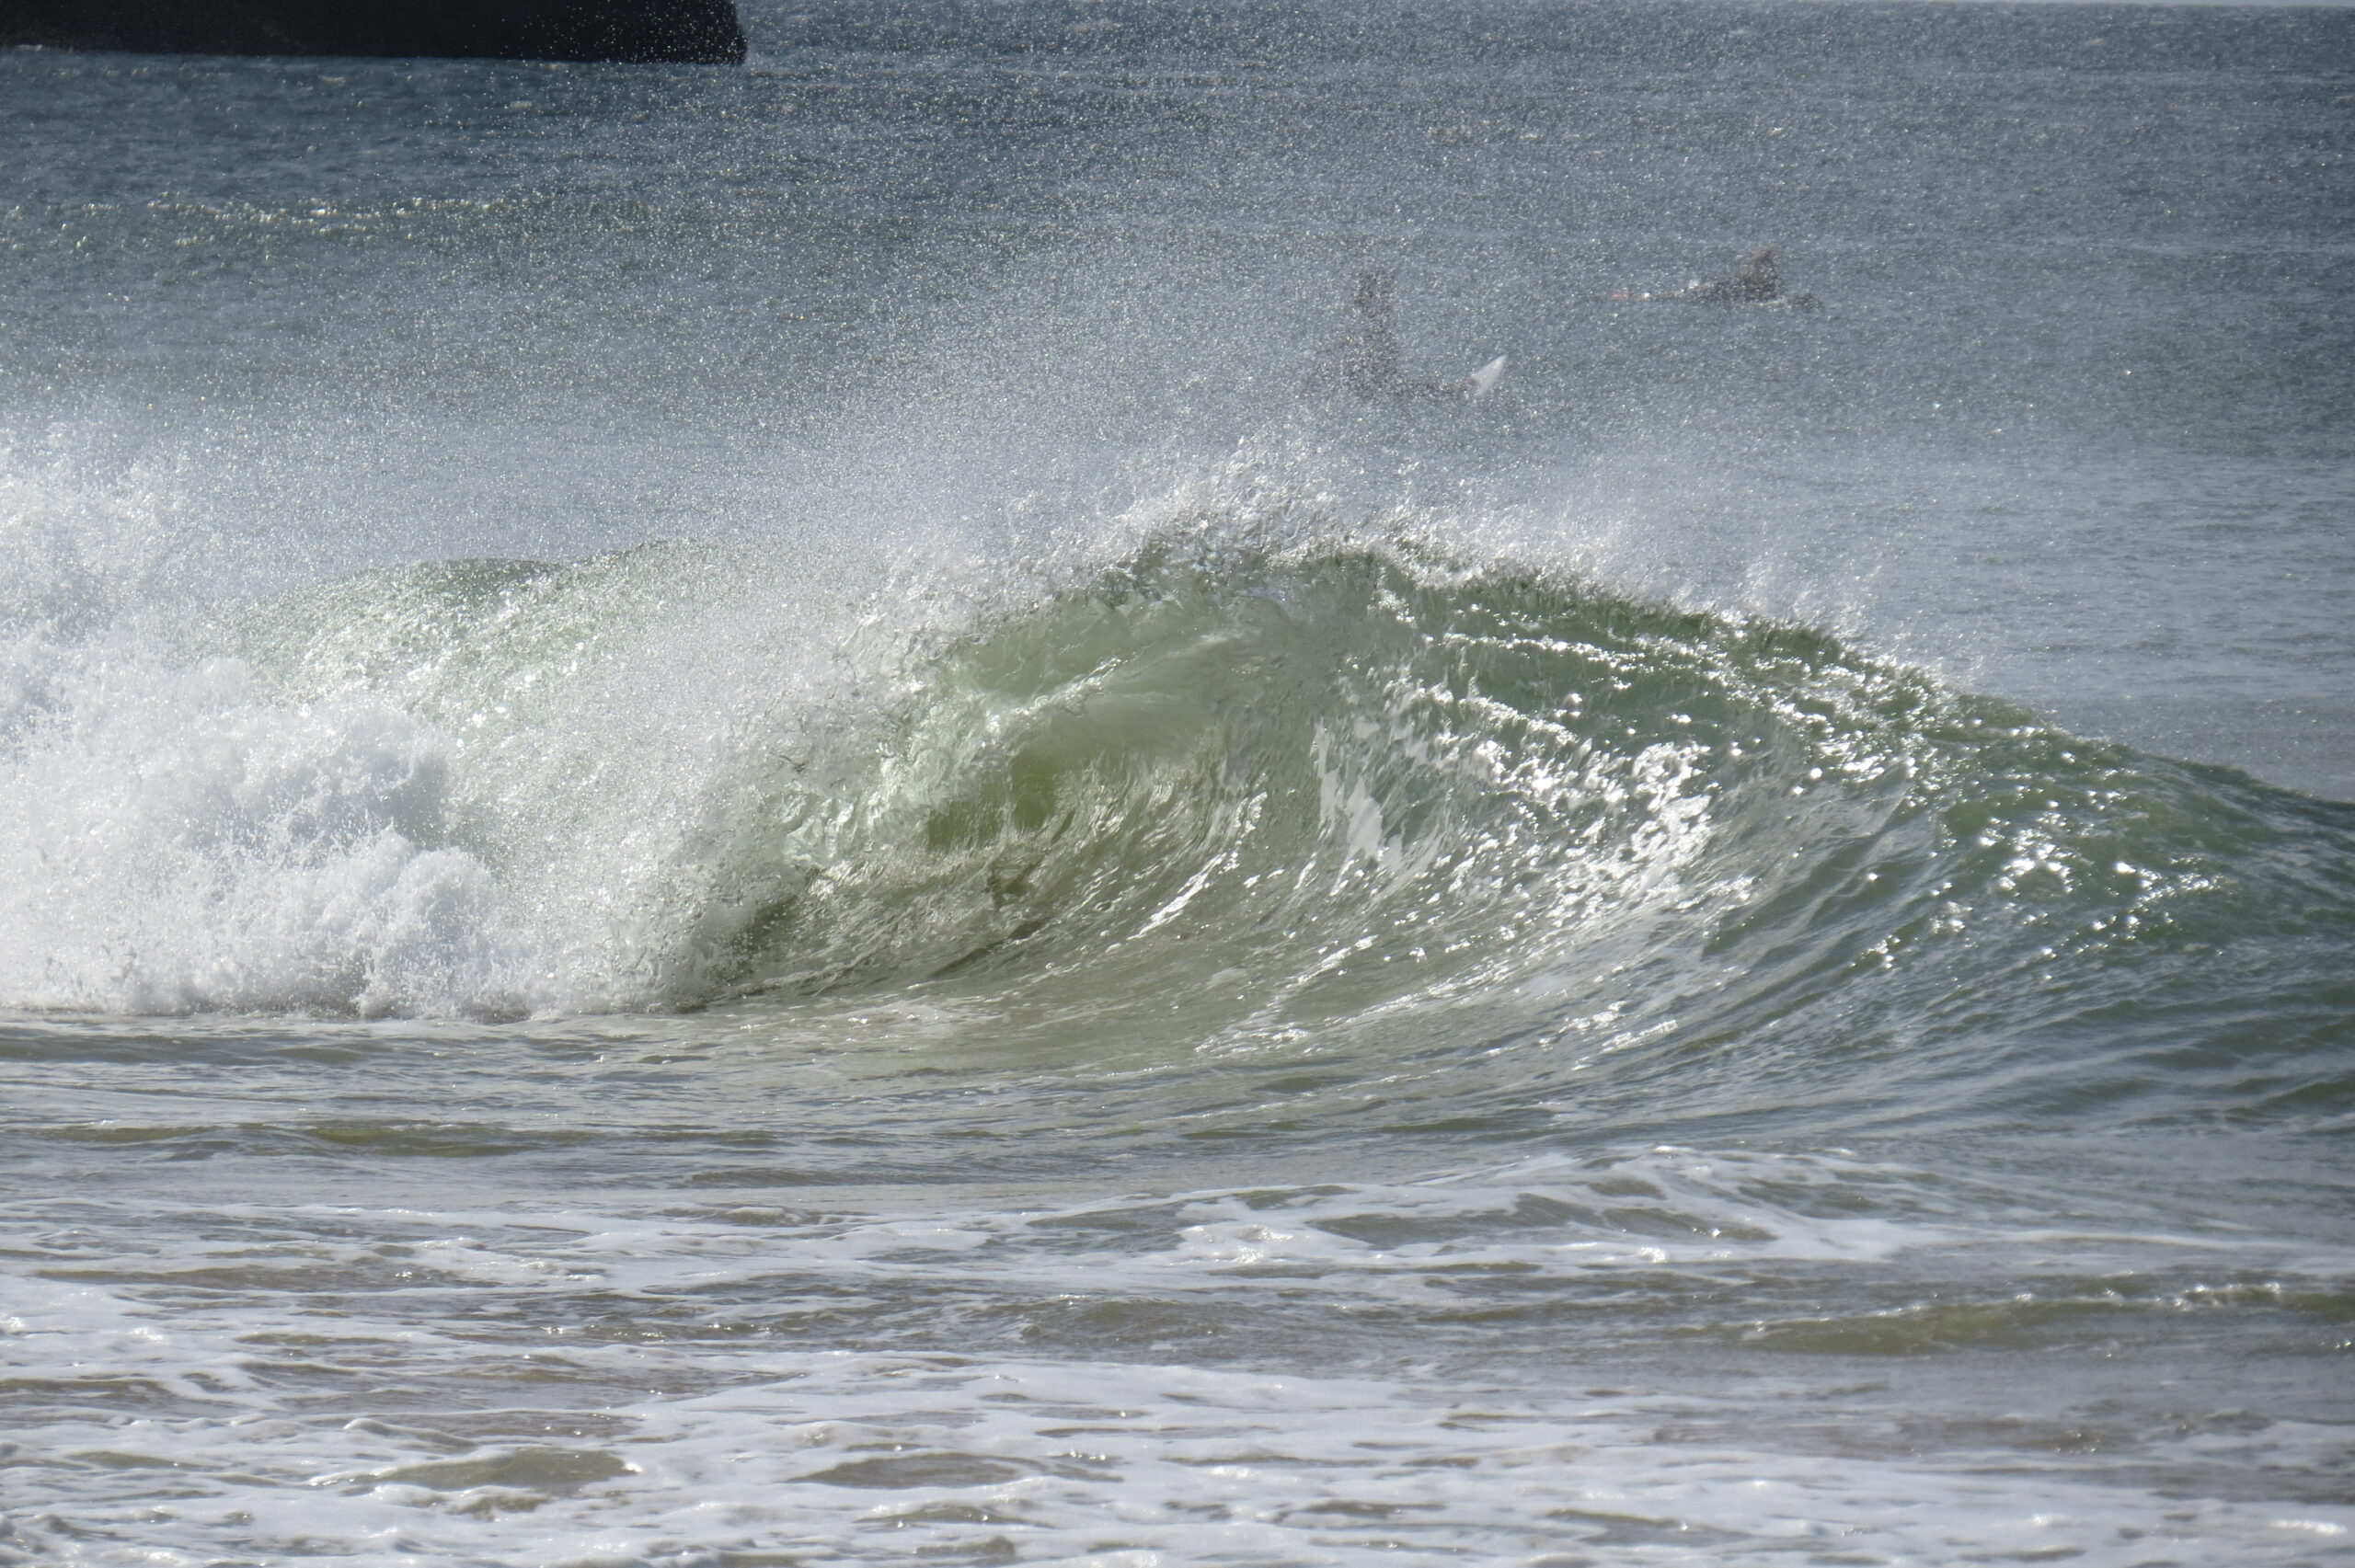 small-tube-zavial-surfguid-algarve